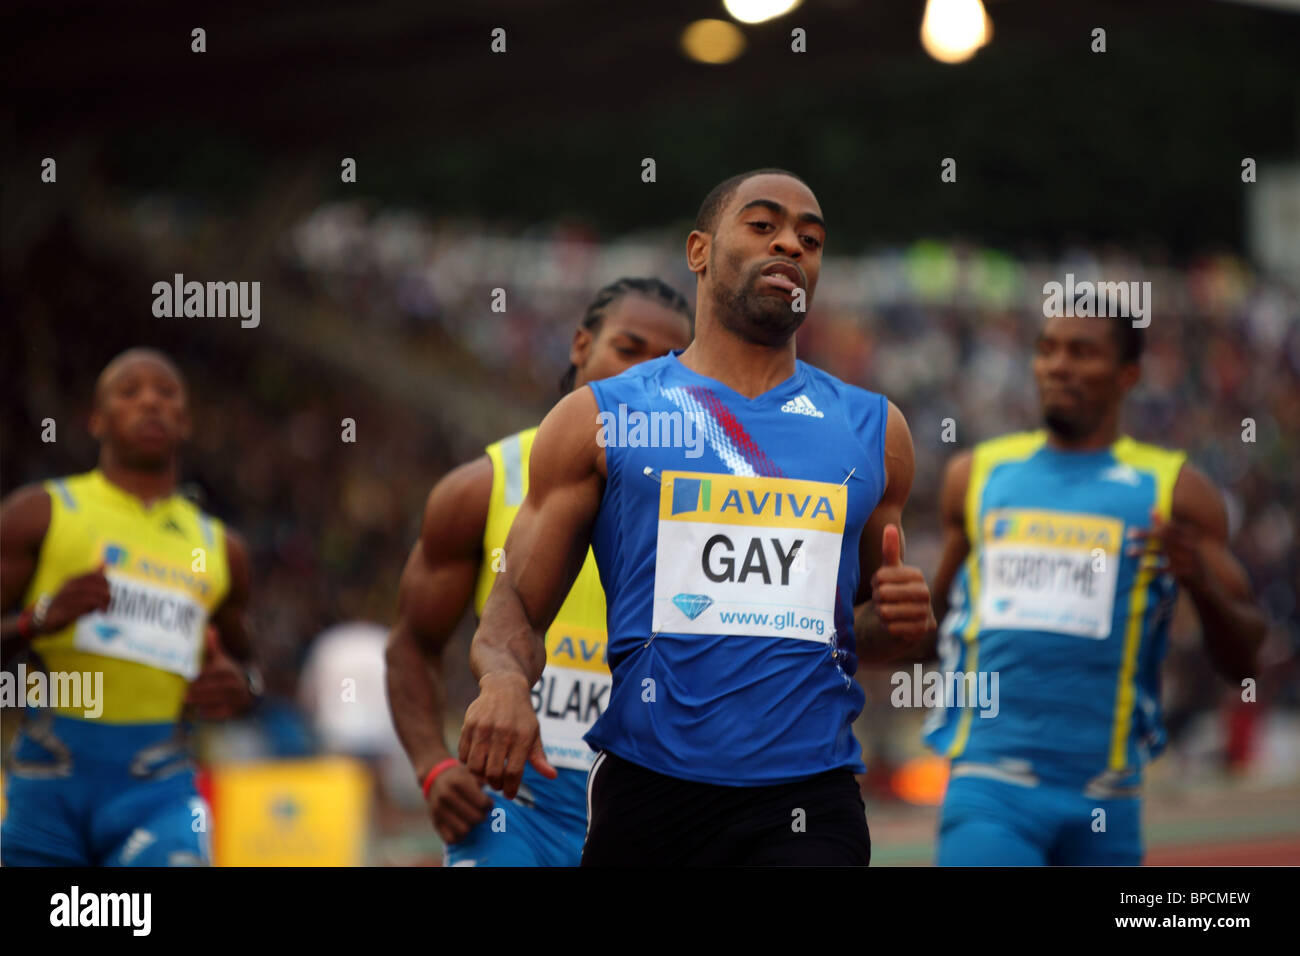 Tyson Gay le gagnant le 100 m sprint race chez Aviva London Grand Prix, Crystal Palace. Août 2010 Banque D'Images